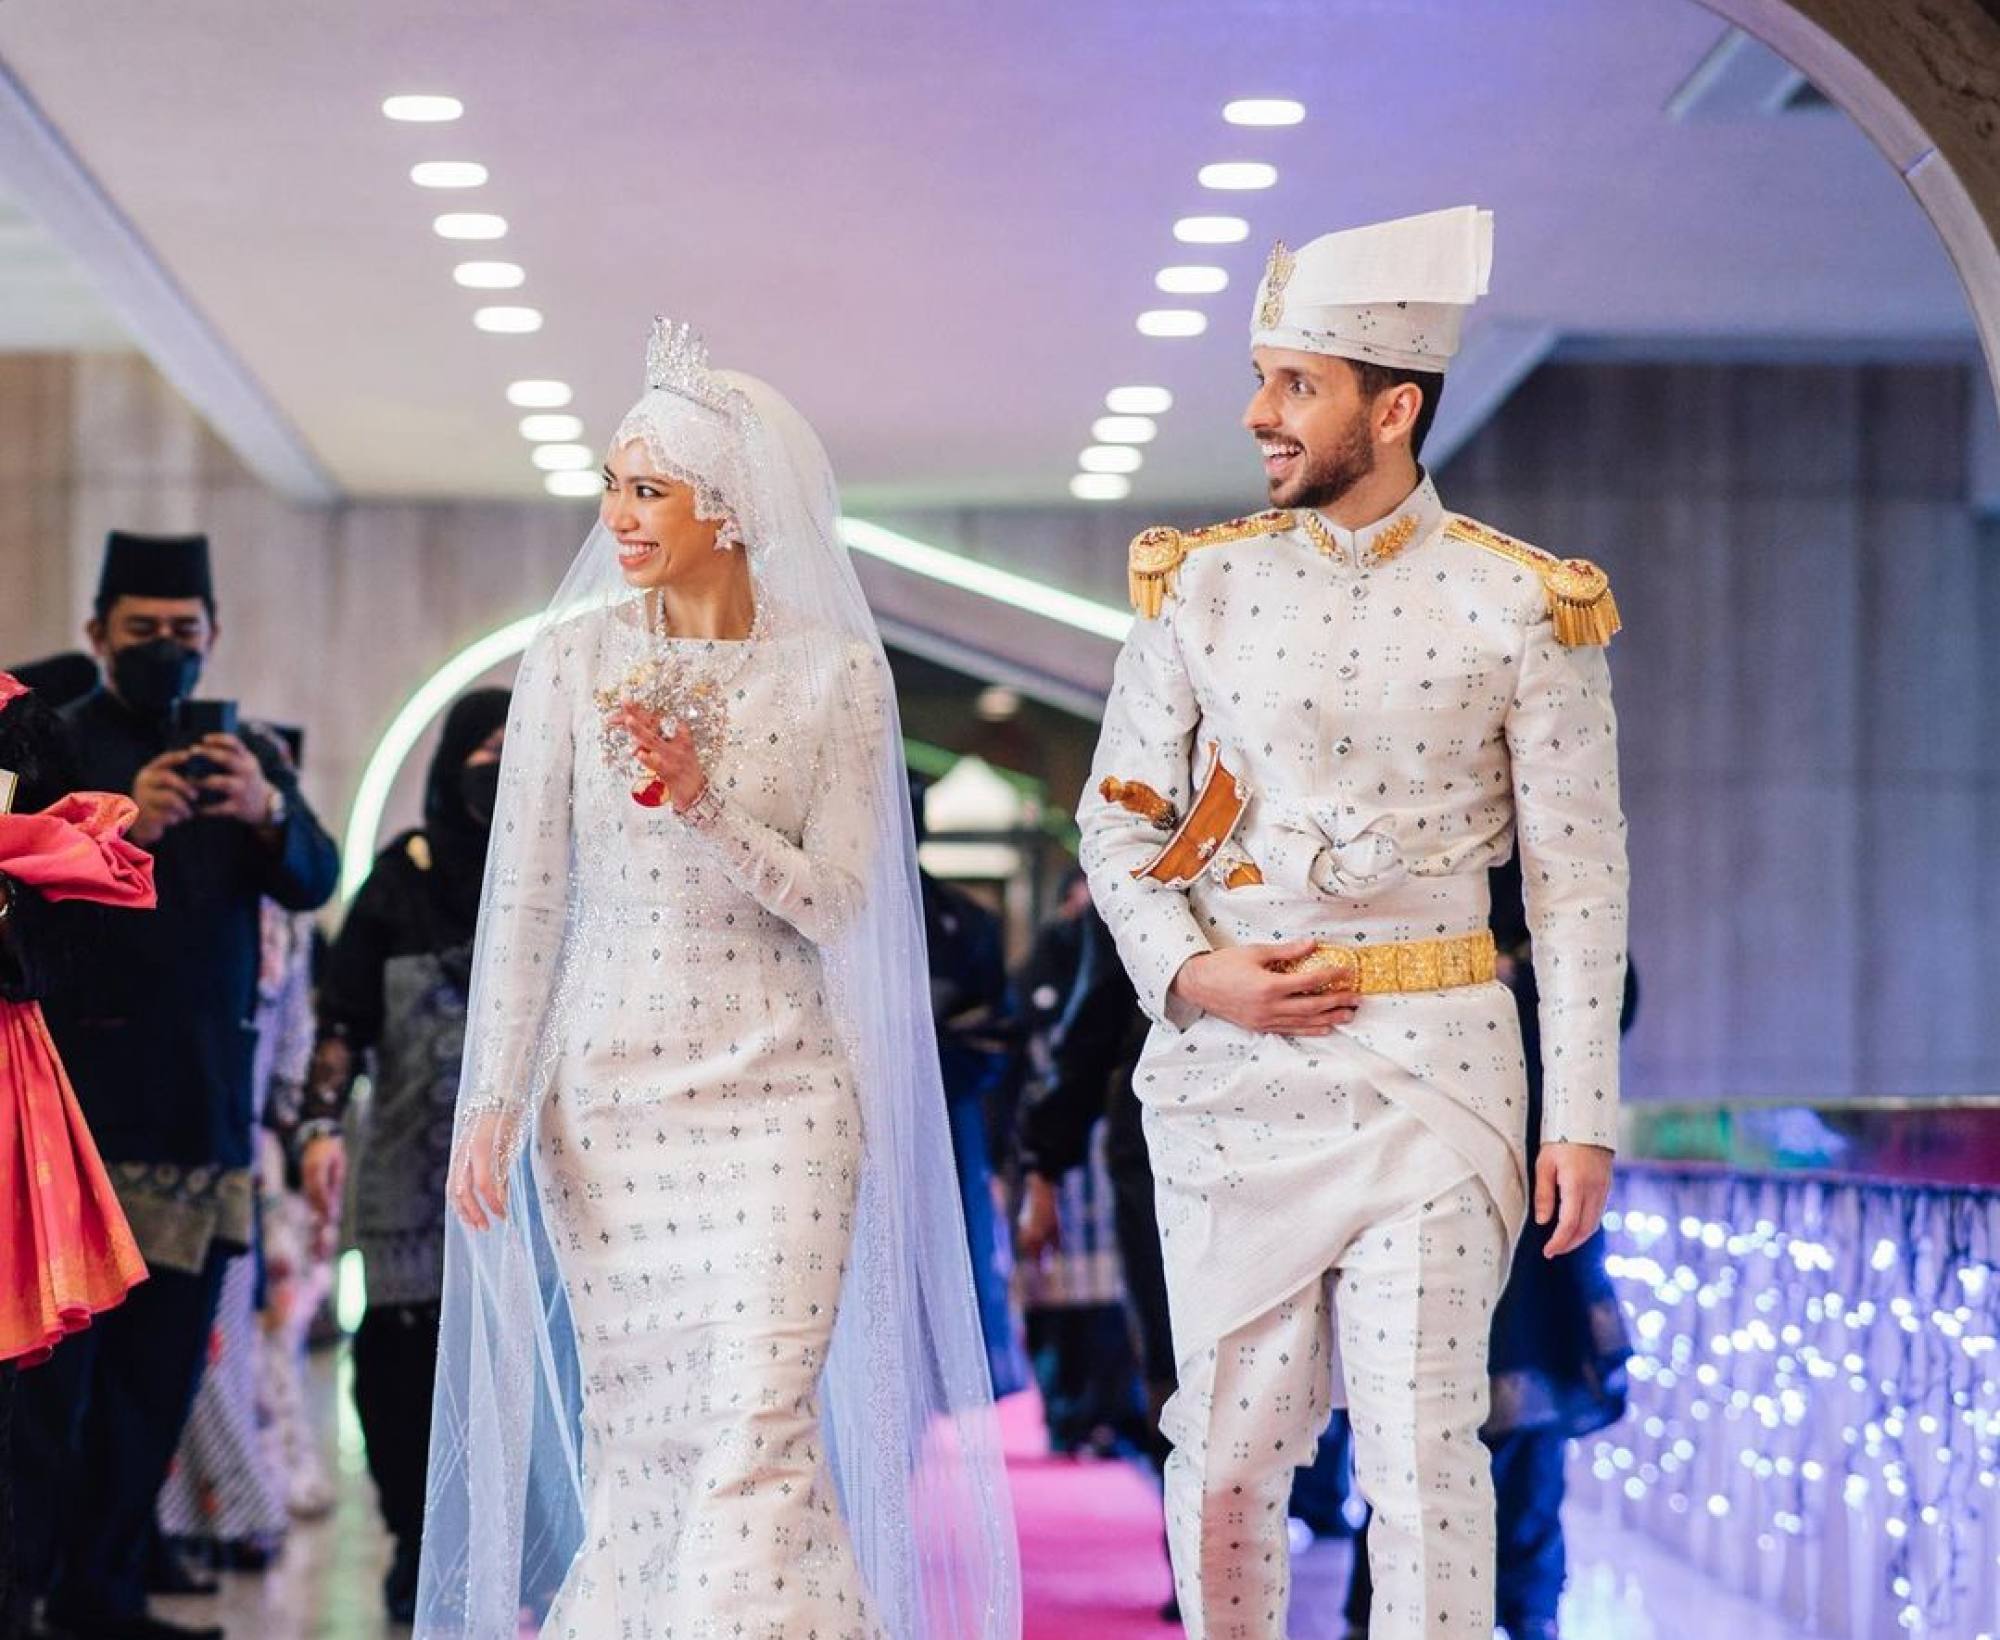 Fadzilah wedding princess Brunei’s lavish